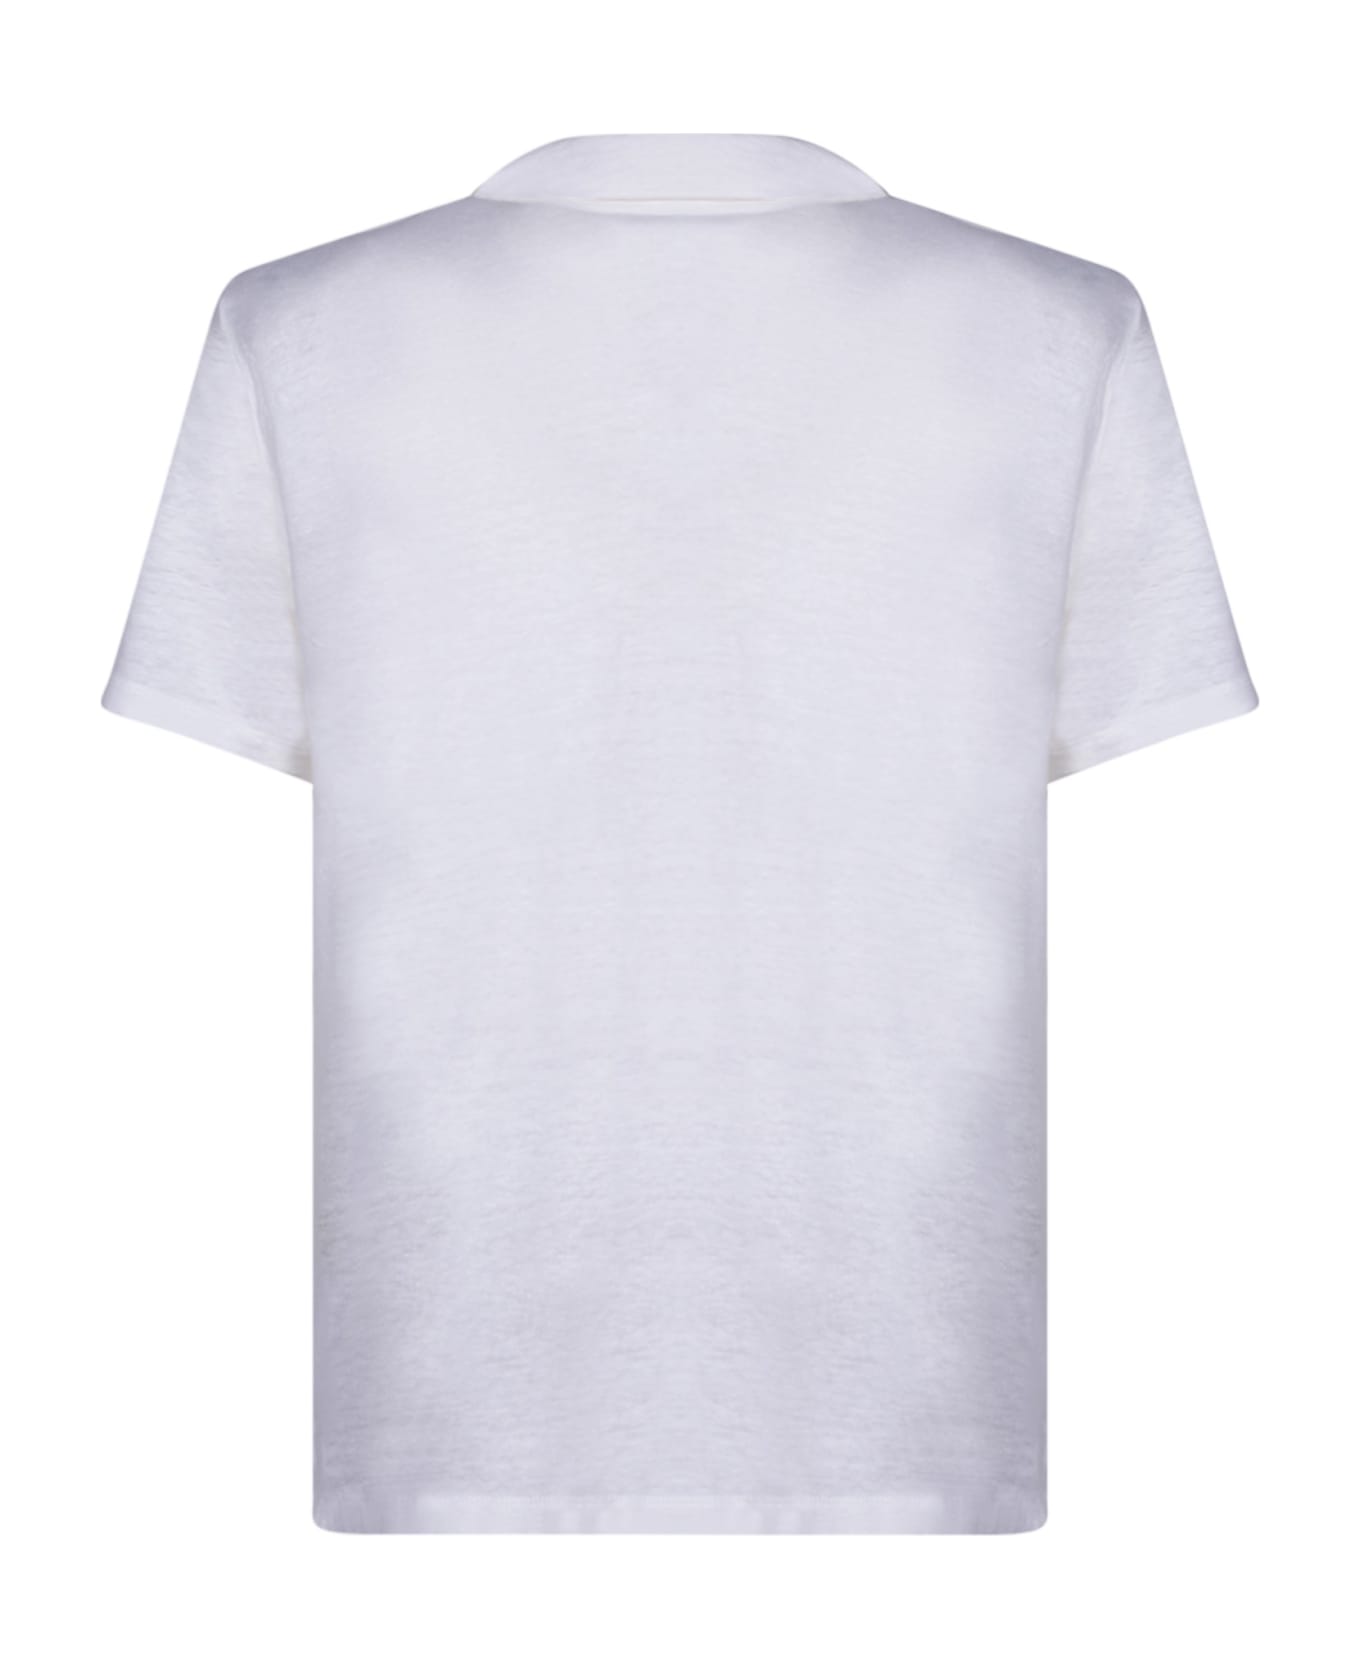 Officine Générale Short Sleeves White Polo Shirt - White ポロシャツ